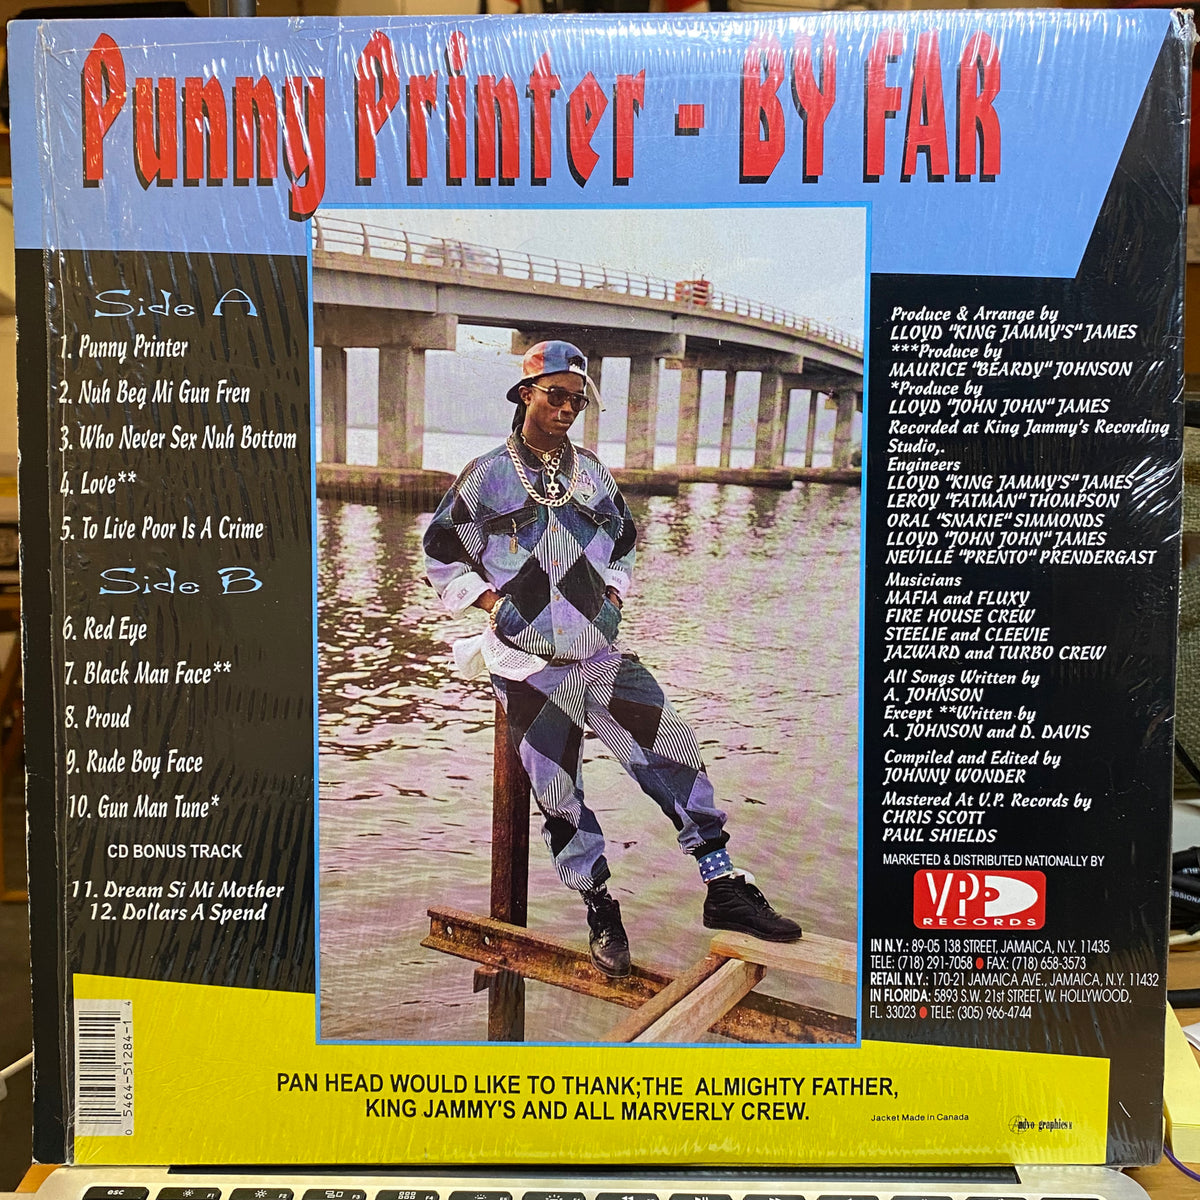 Pan Head / Punanny Printer - By Far | VINYL7 RECORDS